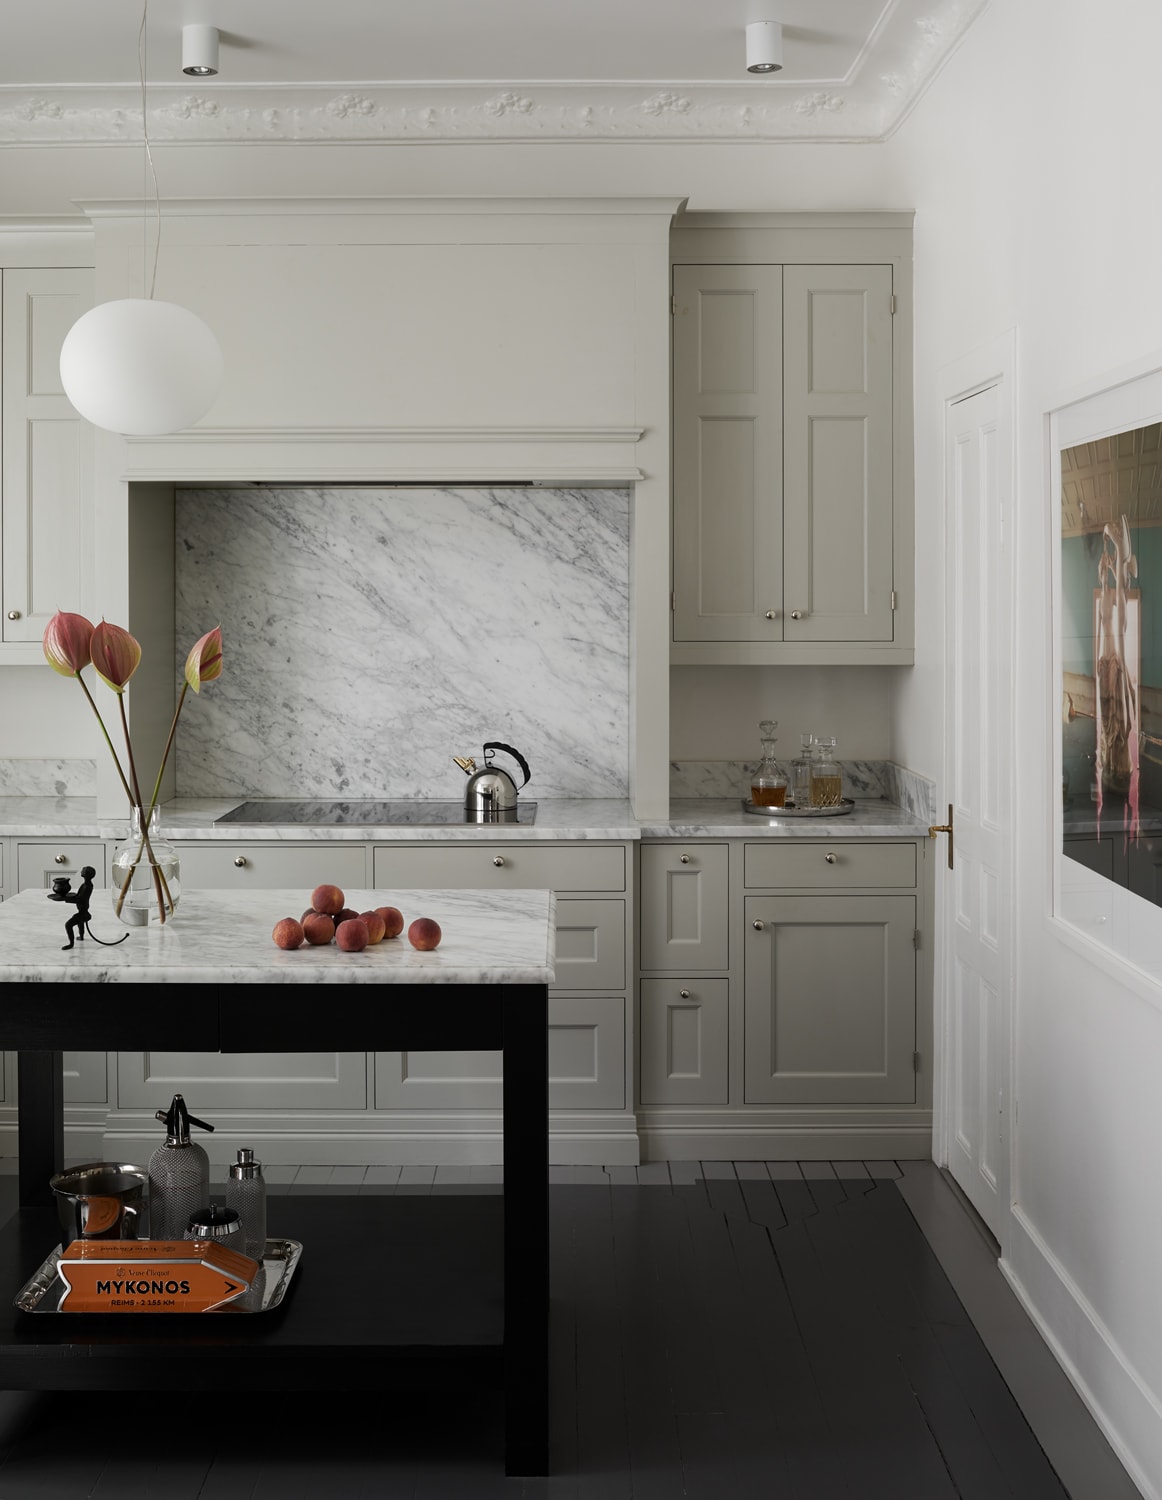 18 inspiring kitchens with beige kitchen cabinets - COCO LAPINE DESIGNCOCO  LAPINE DESIGN